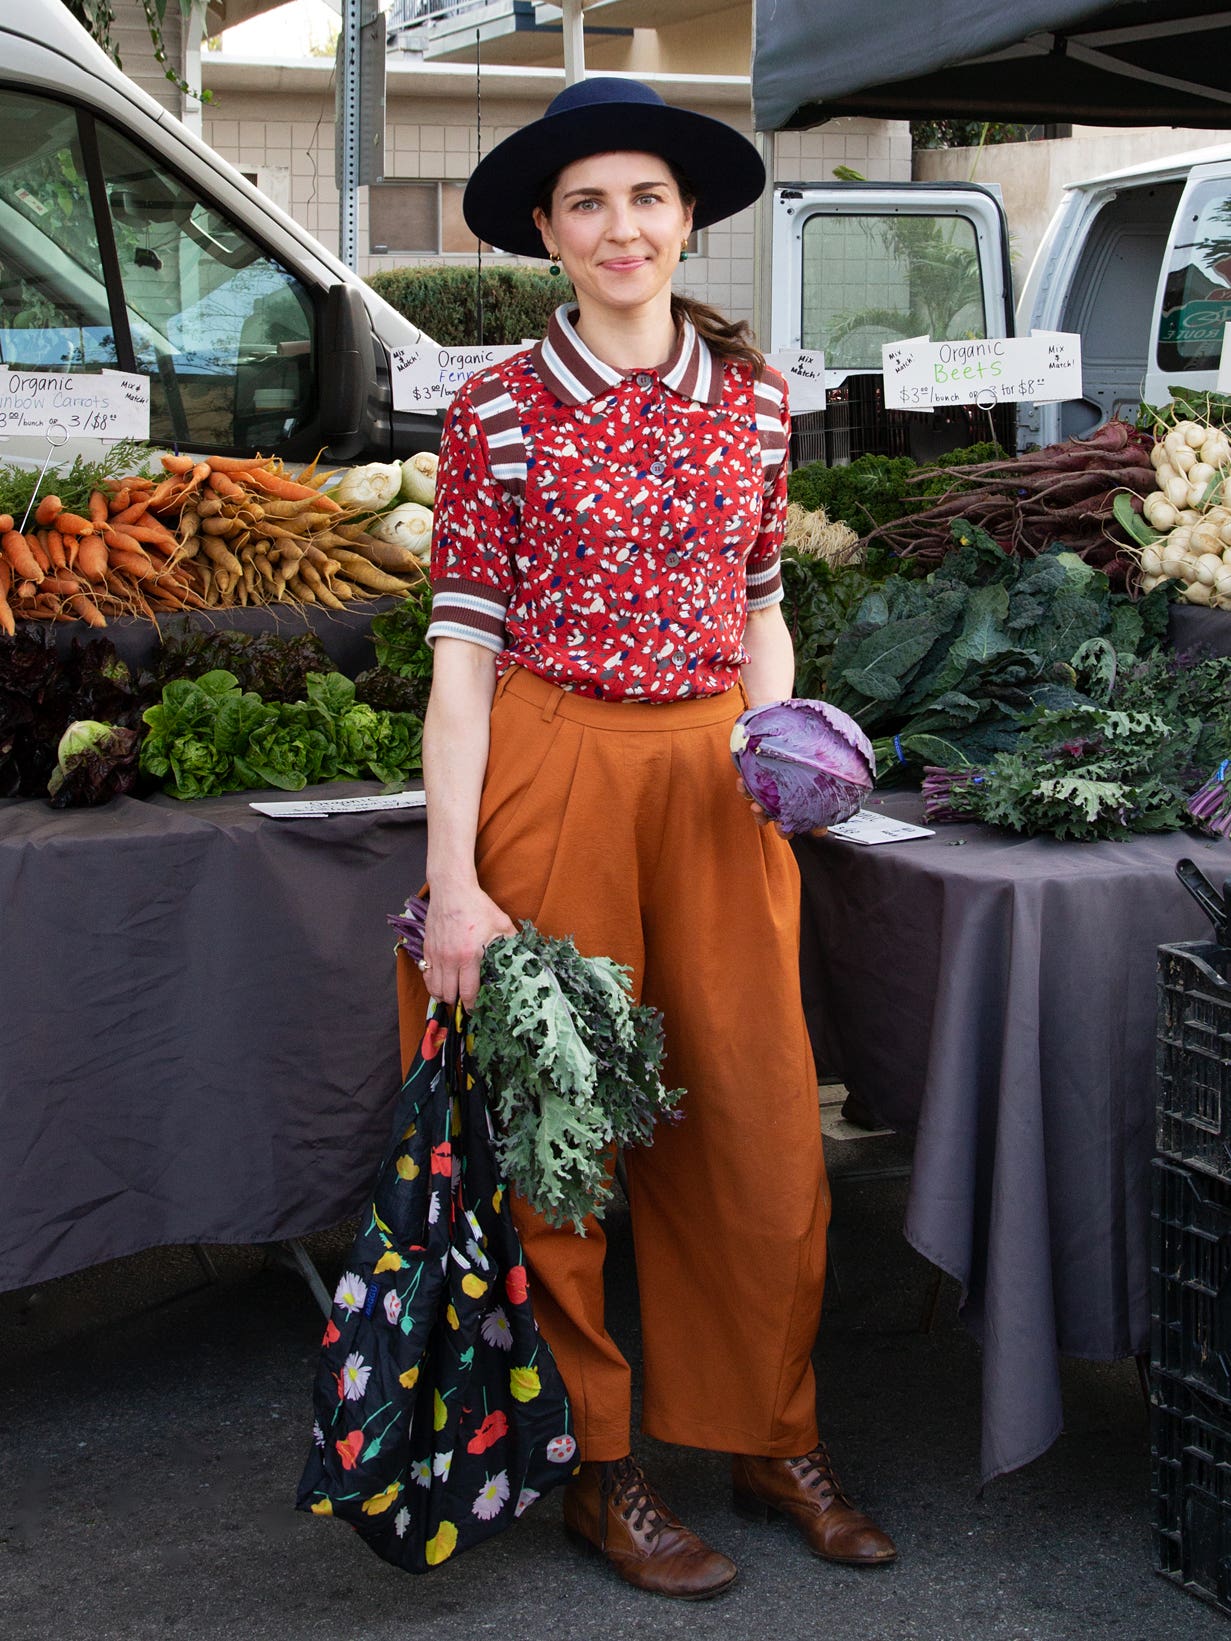 Julia Sherman at the farmers market